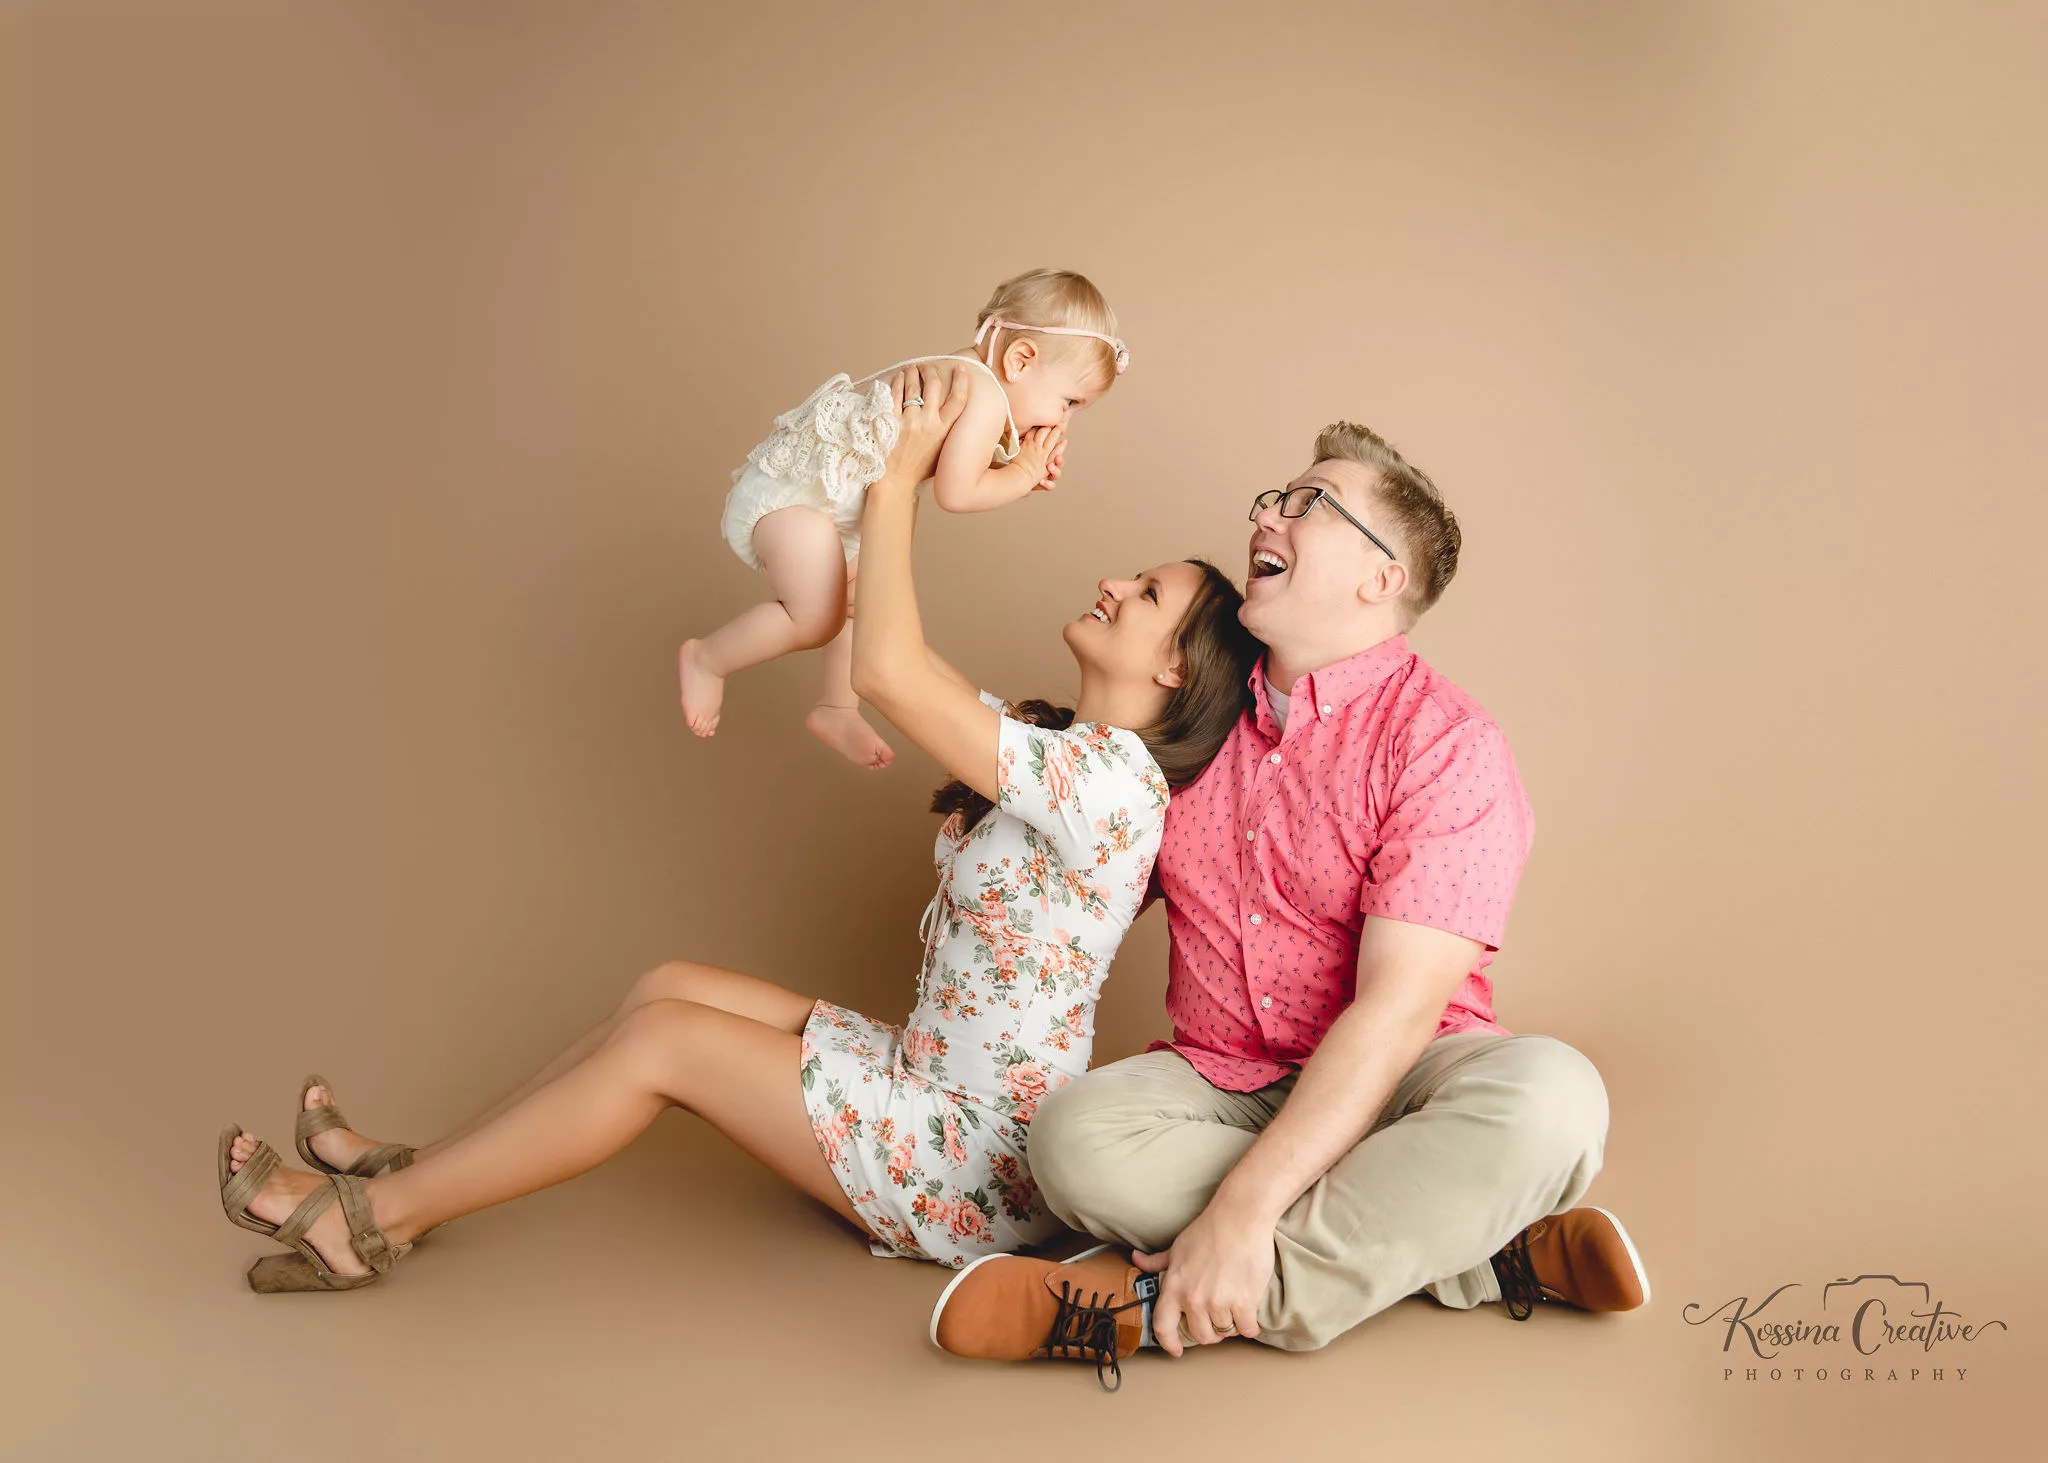 Orlando Family Cake Smash 1st Birthday Photographer Photo Studio brown background family of three baby up in air pink white